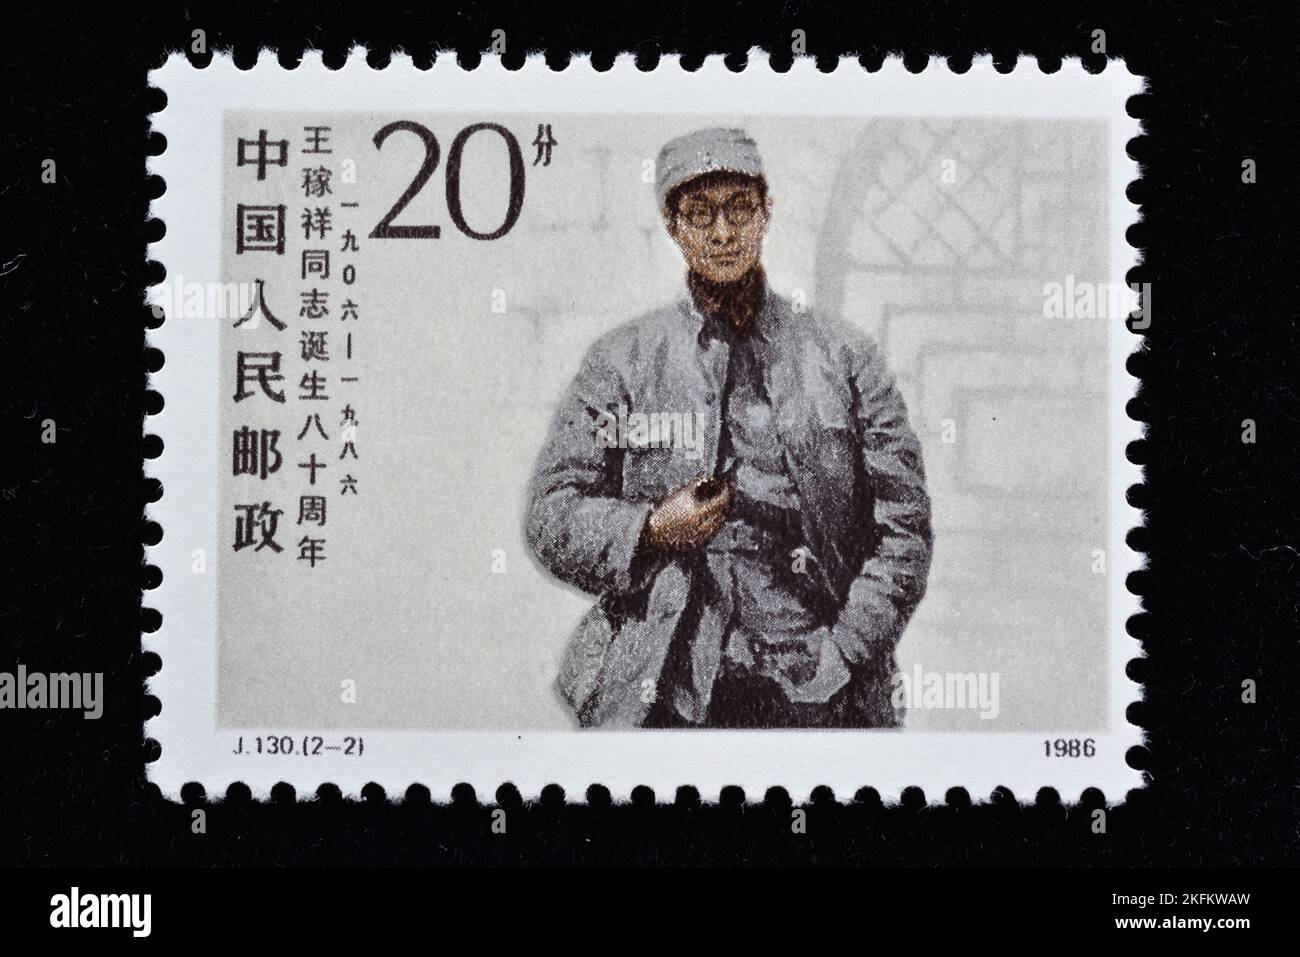 CHINE - VERS 1986: Un timbre imprimé en Chine montre 80th Anniv. De naissance de Wang Jiaxiang Wang Jiaxiang à Yan'an, vers 1986 Banque D'Images